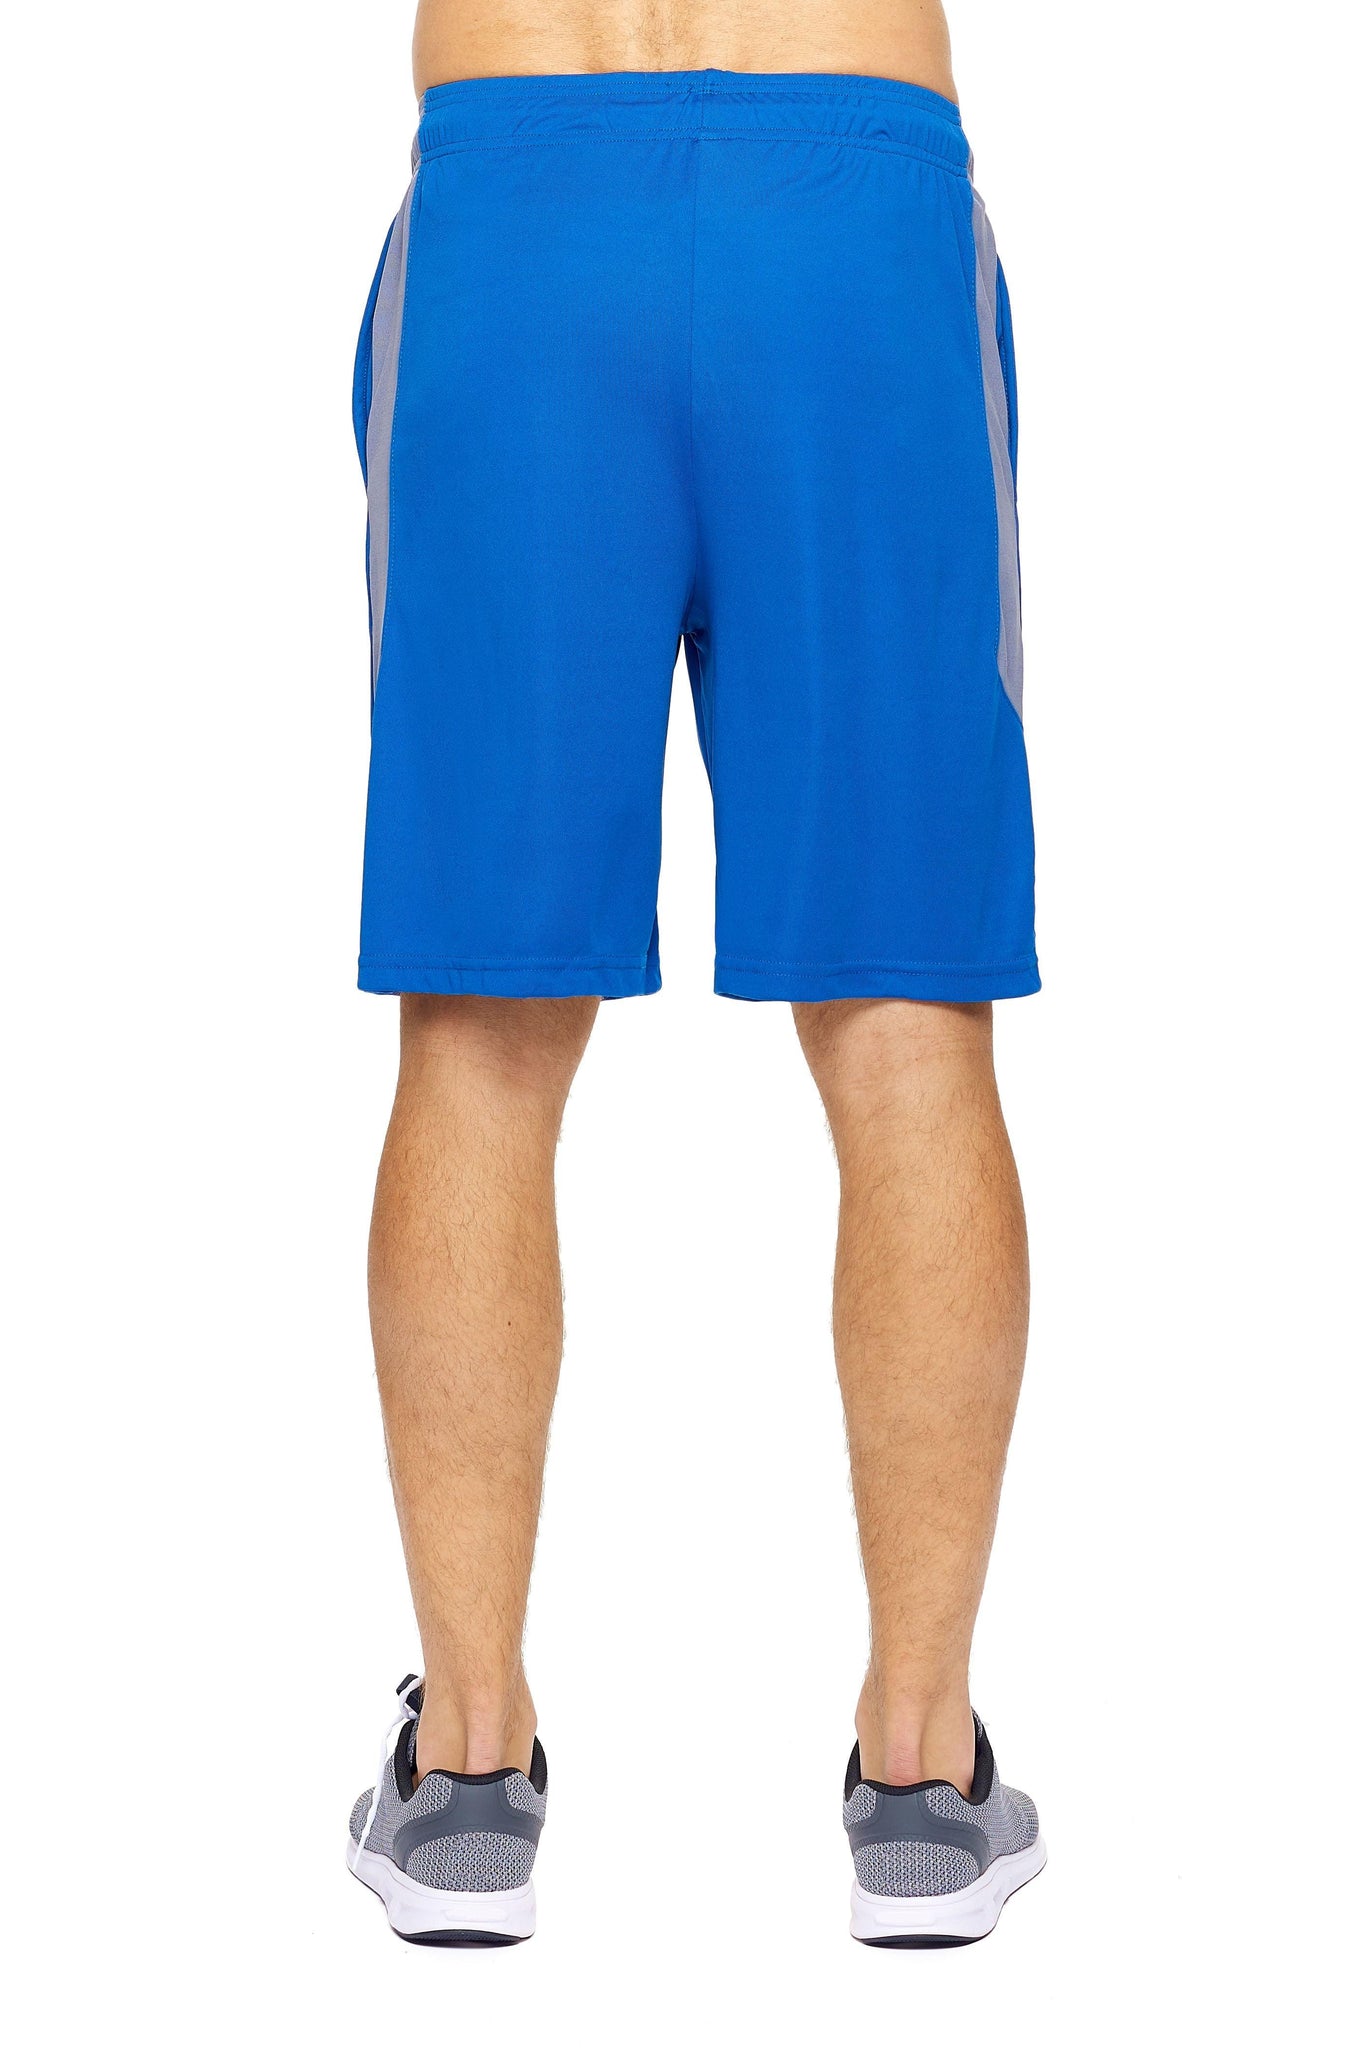 AI1087🇺🇸 DriMax™ Outdoor Shorts - Expert Brand #ROYAL BLUE